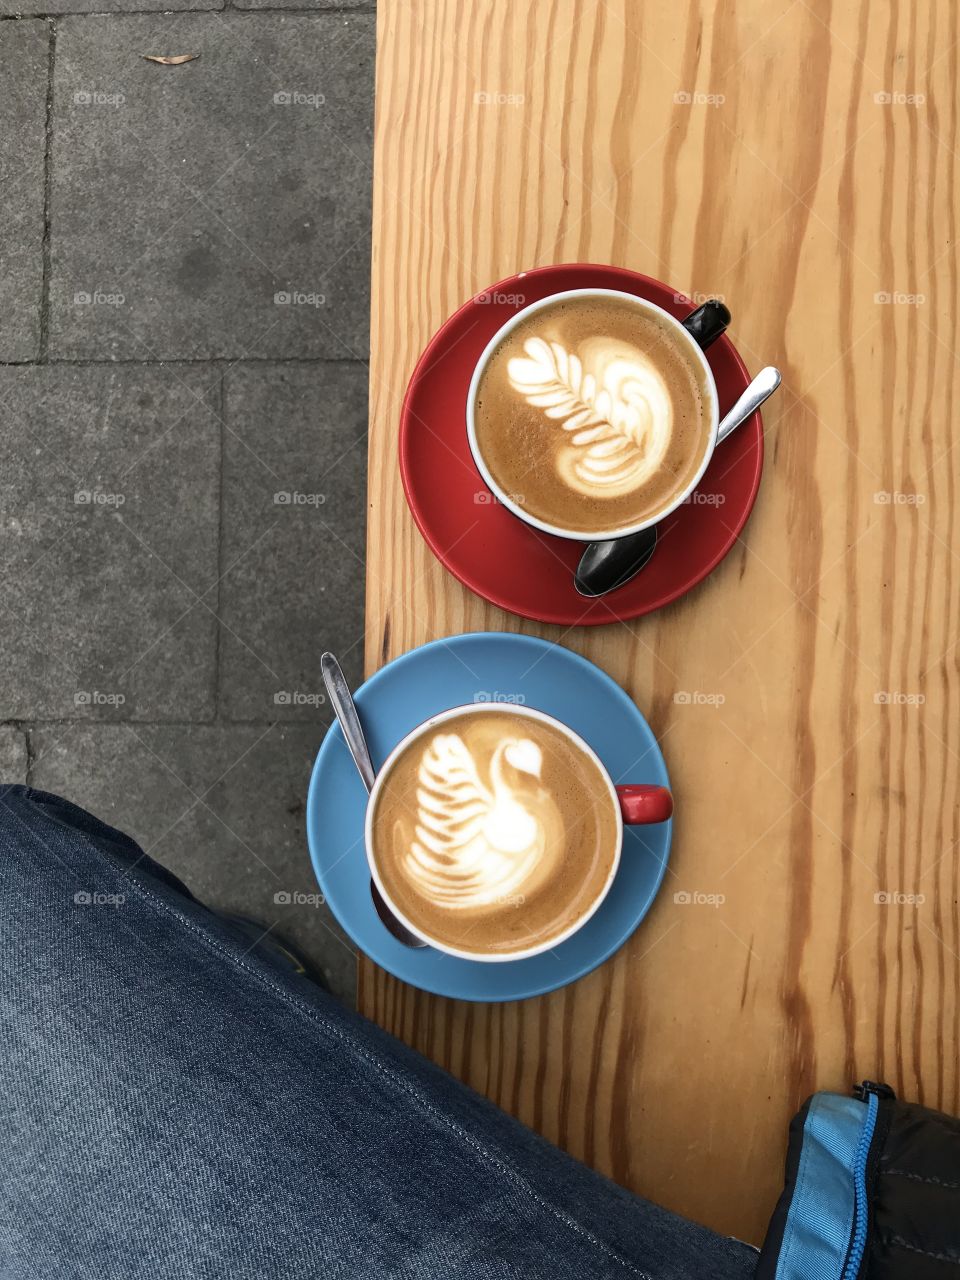 Two latte art capucino